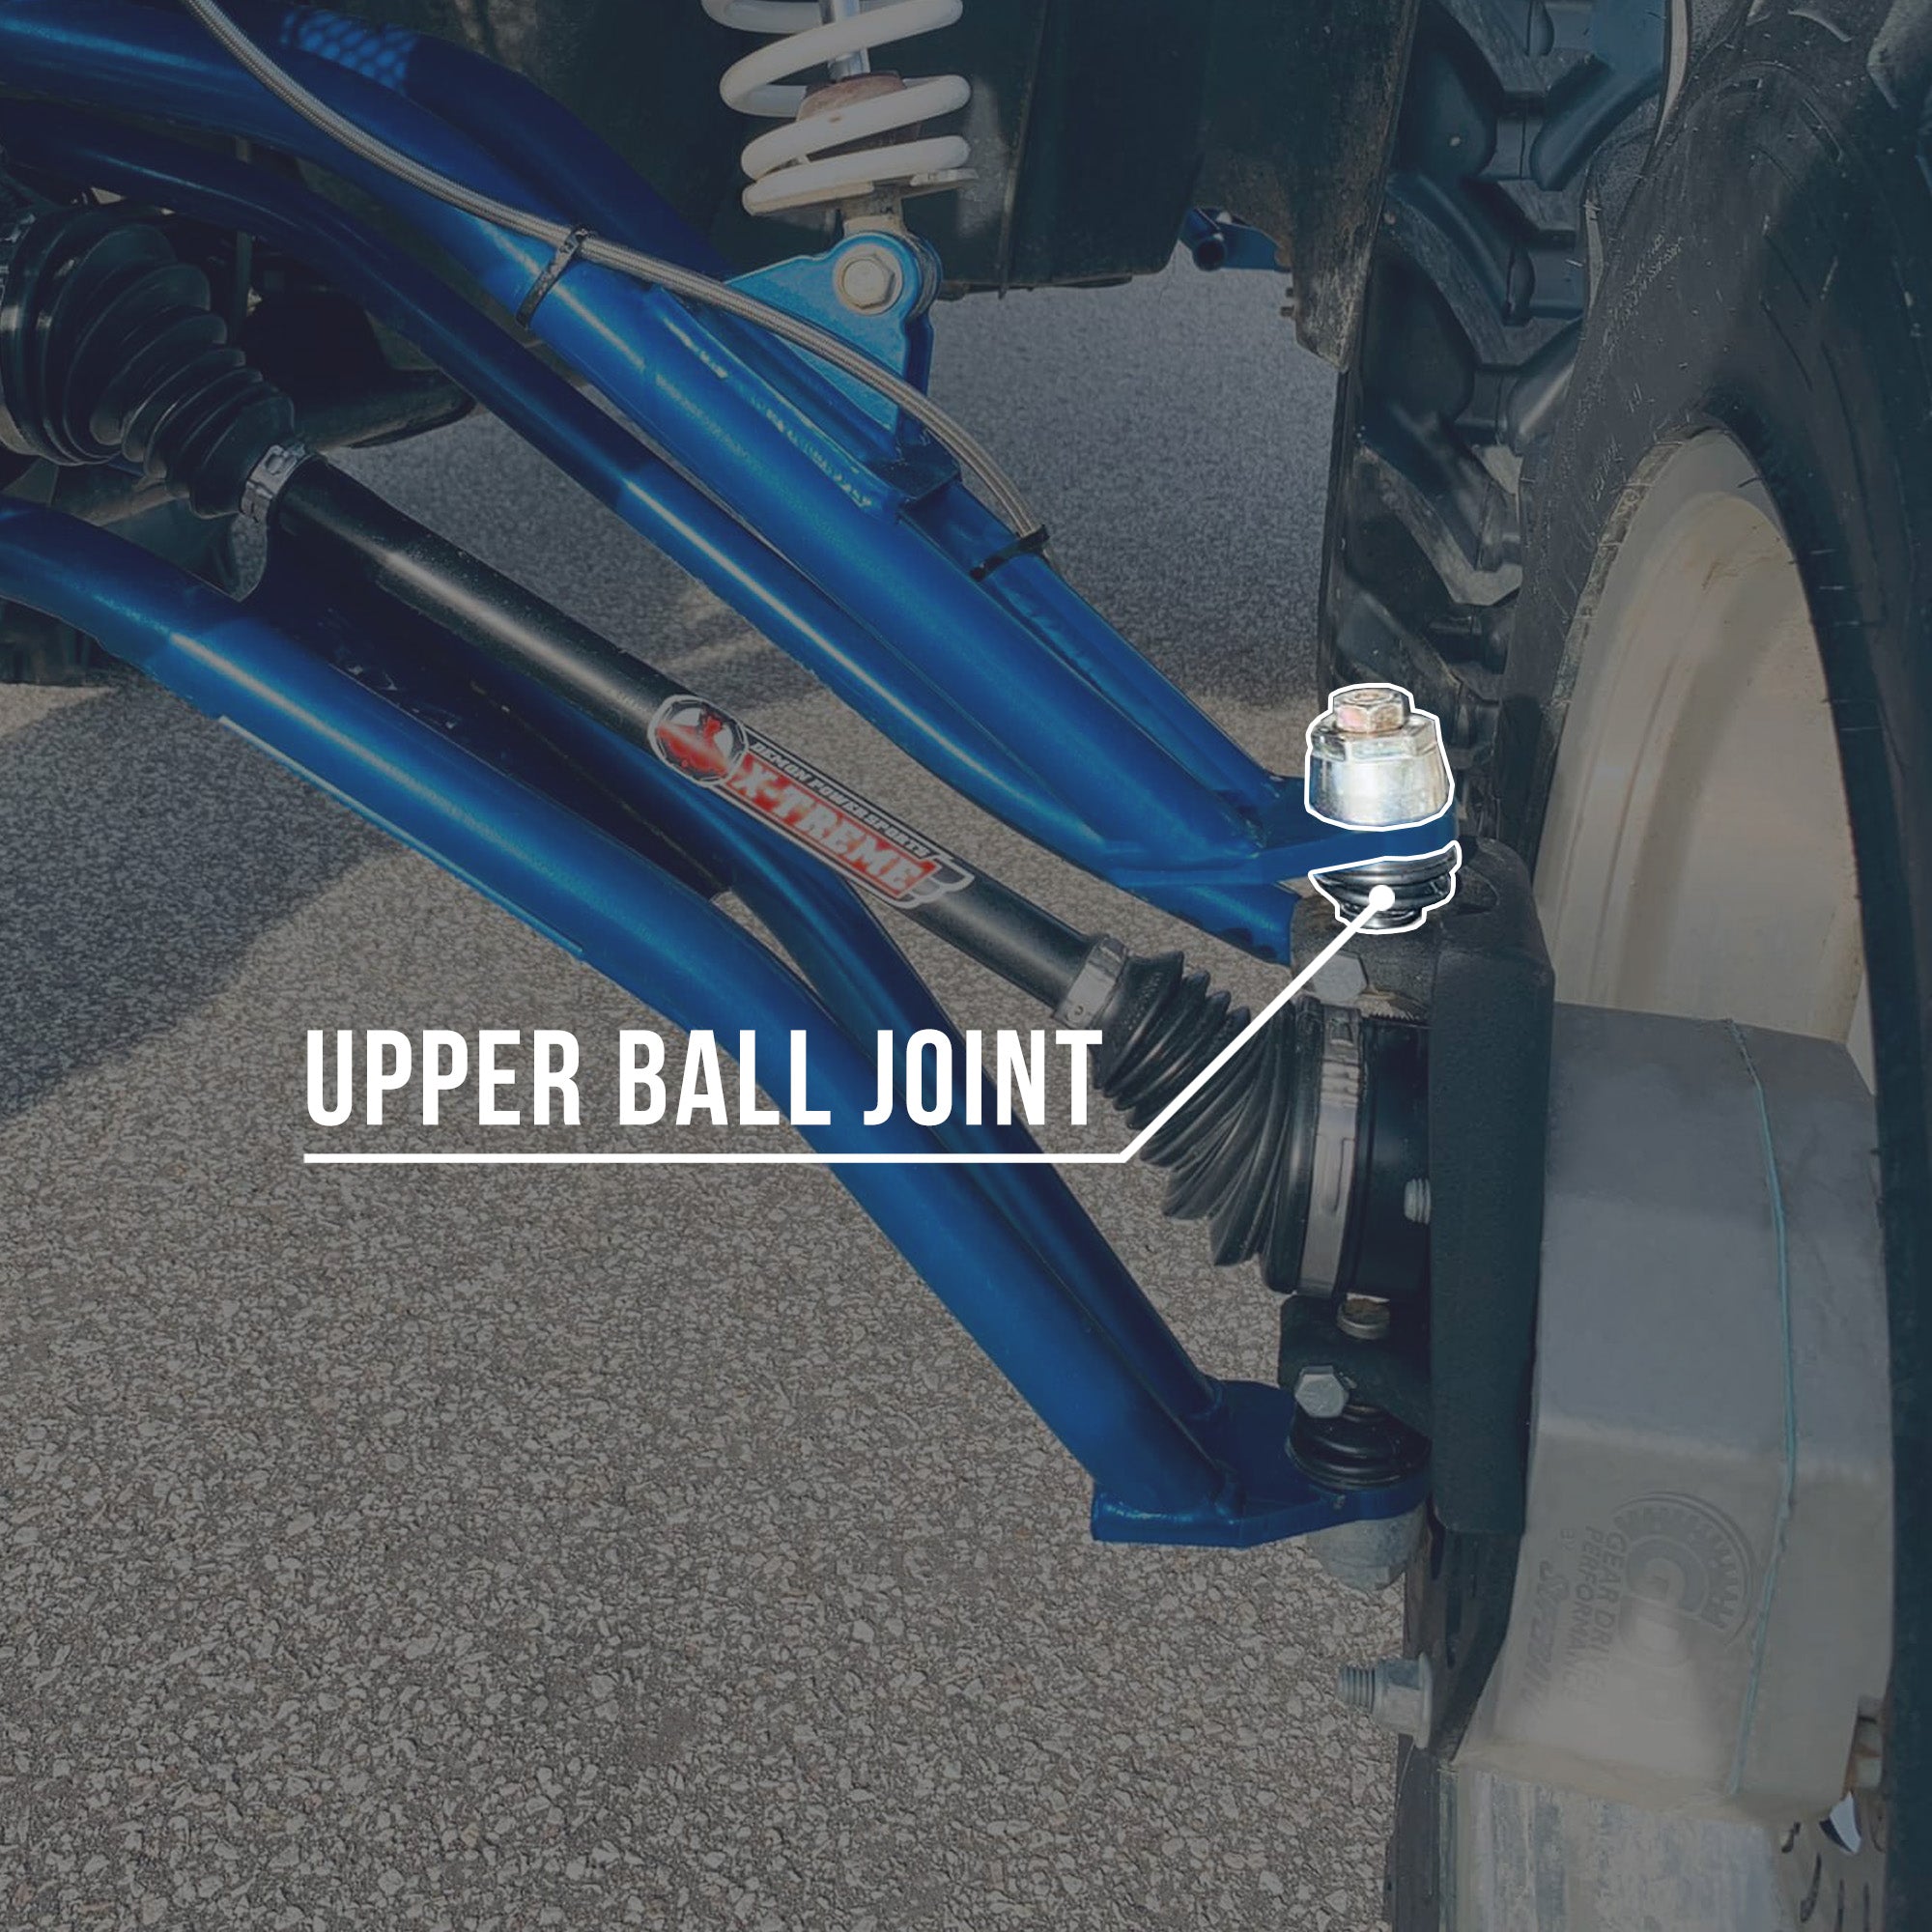 Honda TRX350 Rugged Ball Joint